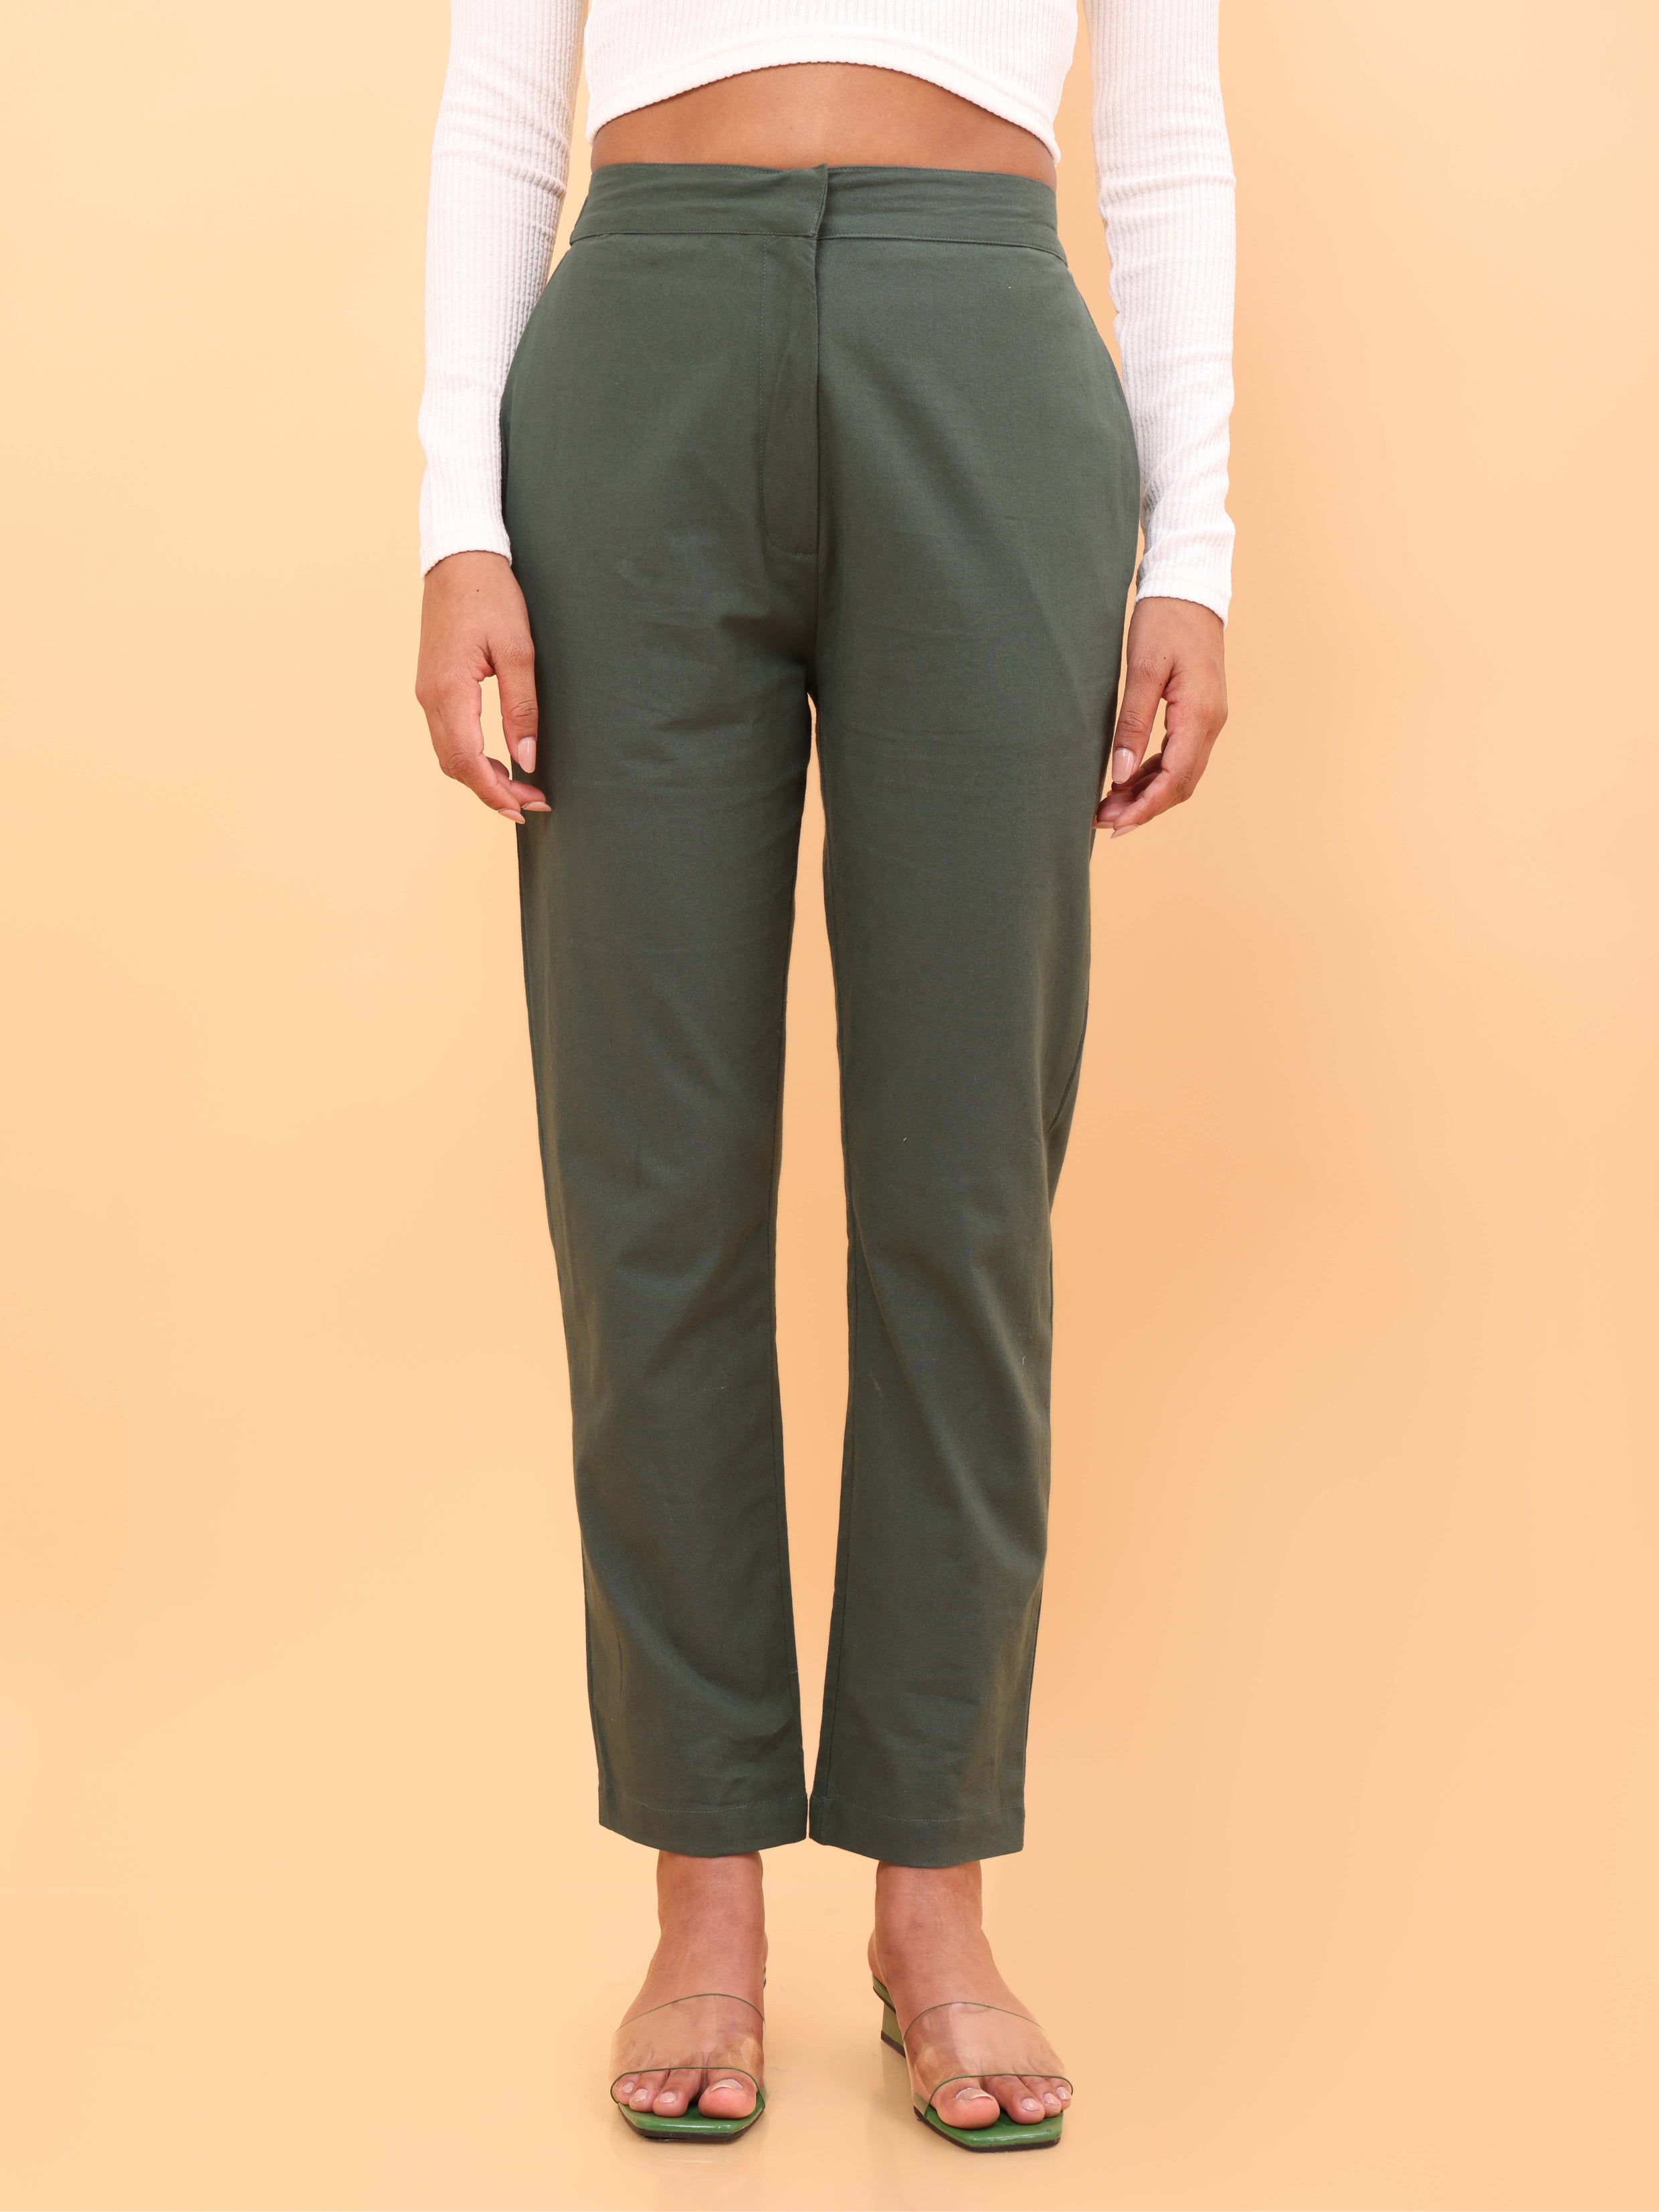 Amazon.com: Olive Green Jeans Women